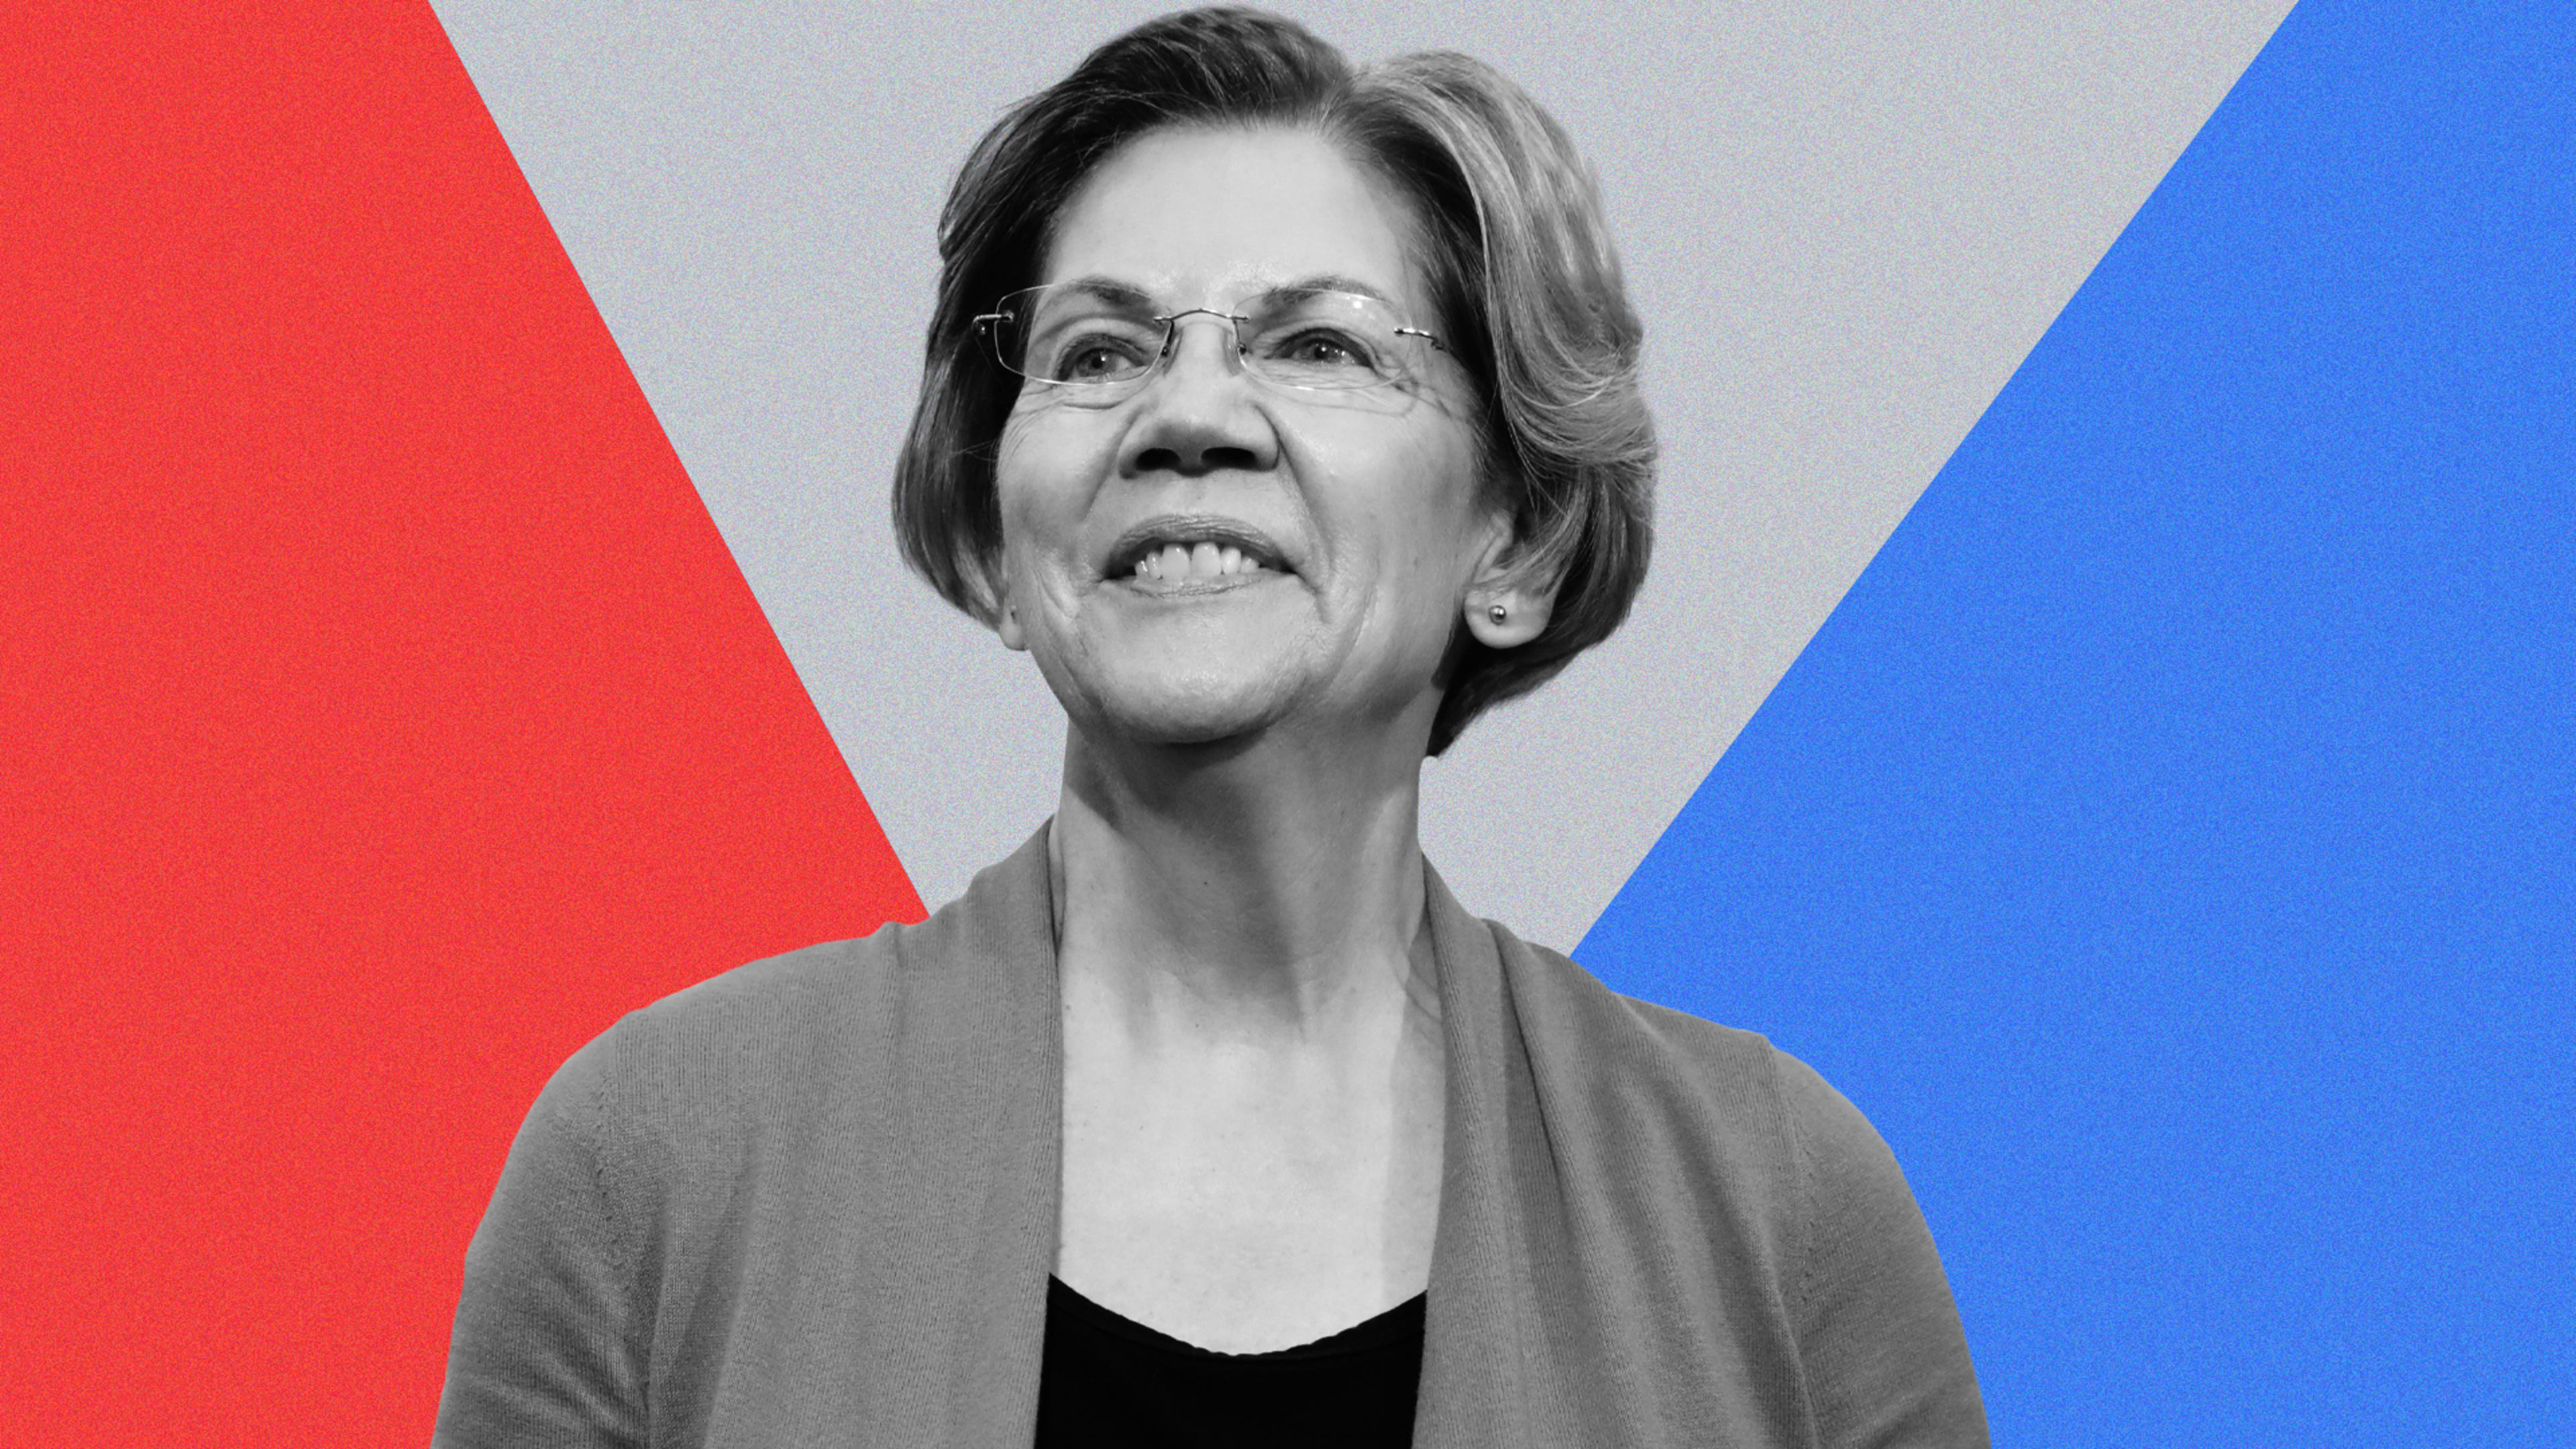 Goodbye, Elizabeth: Women supporters devastated as Warren drops out of the presidential race